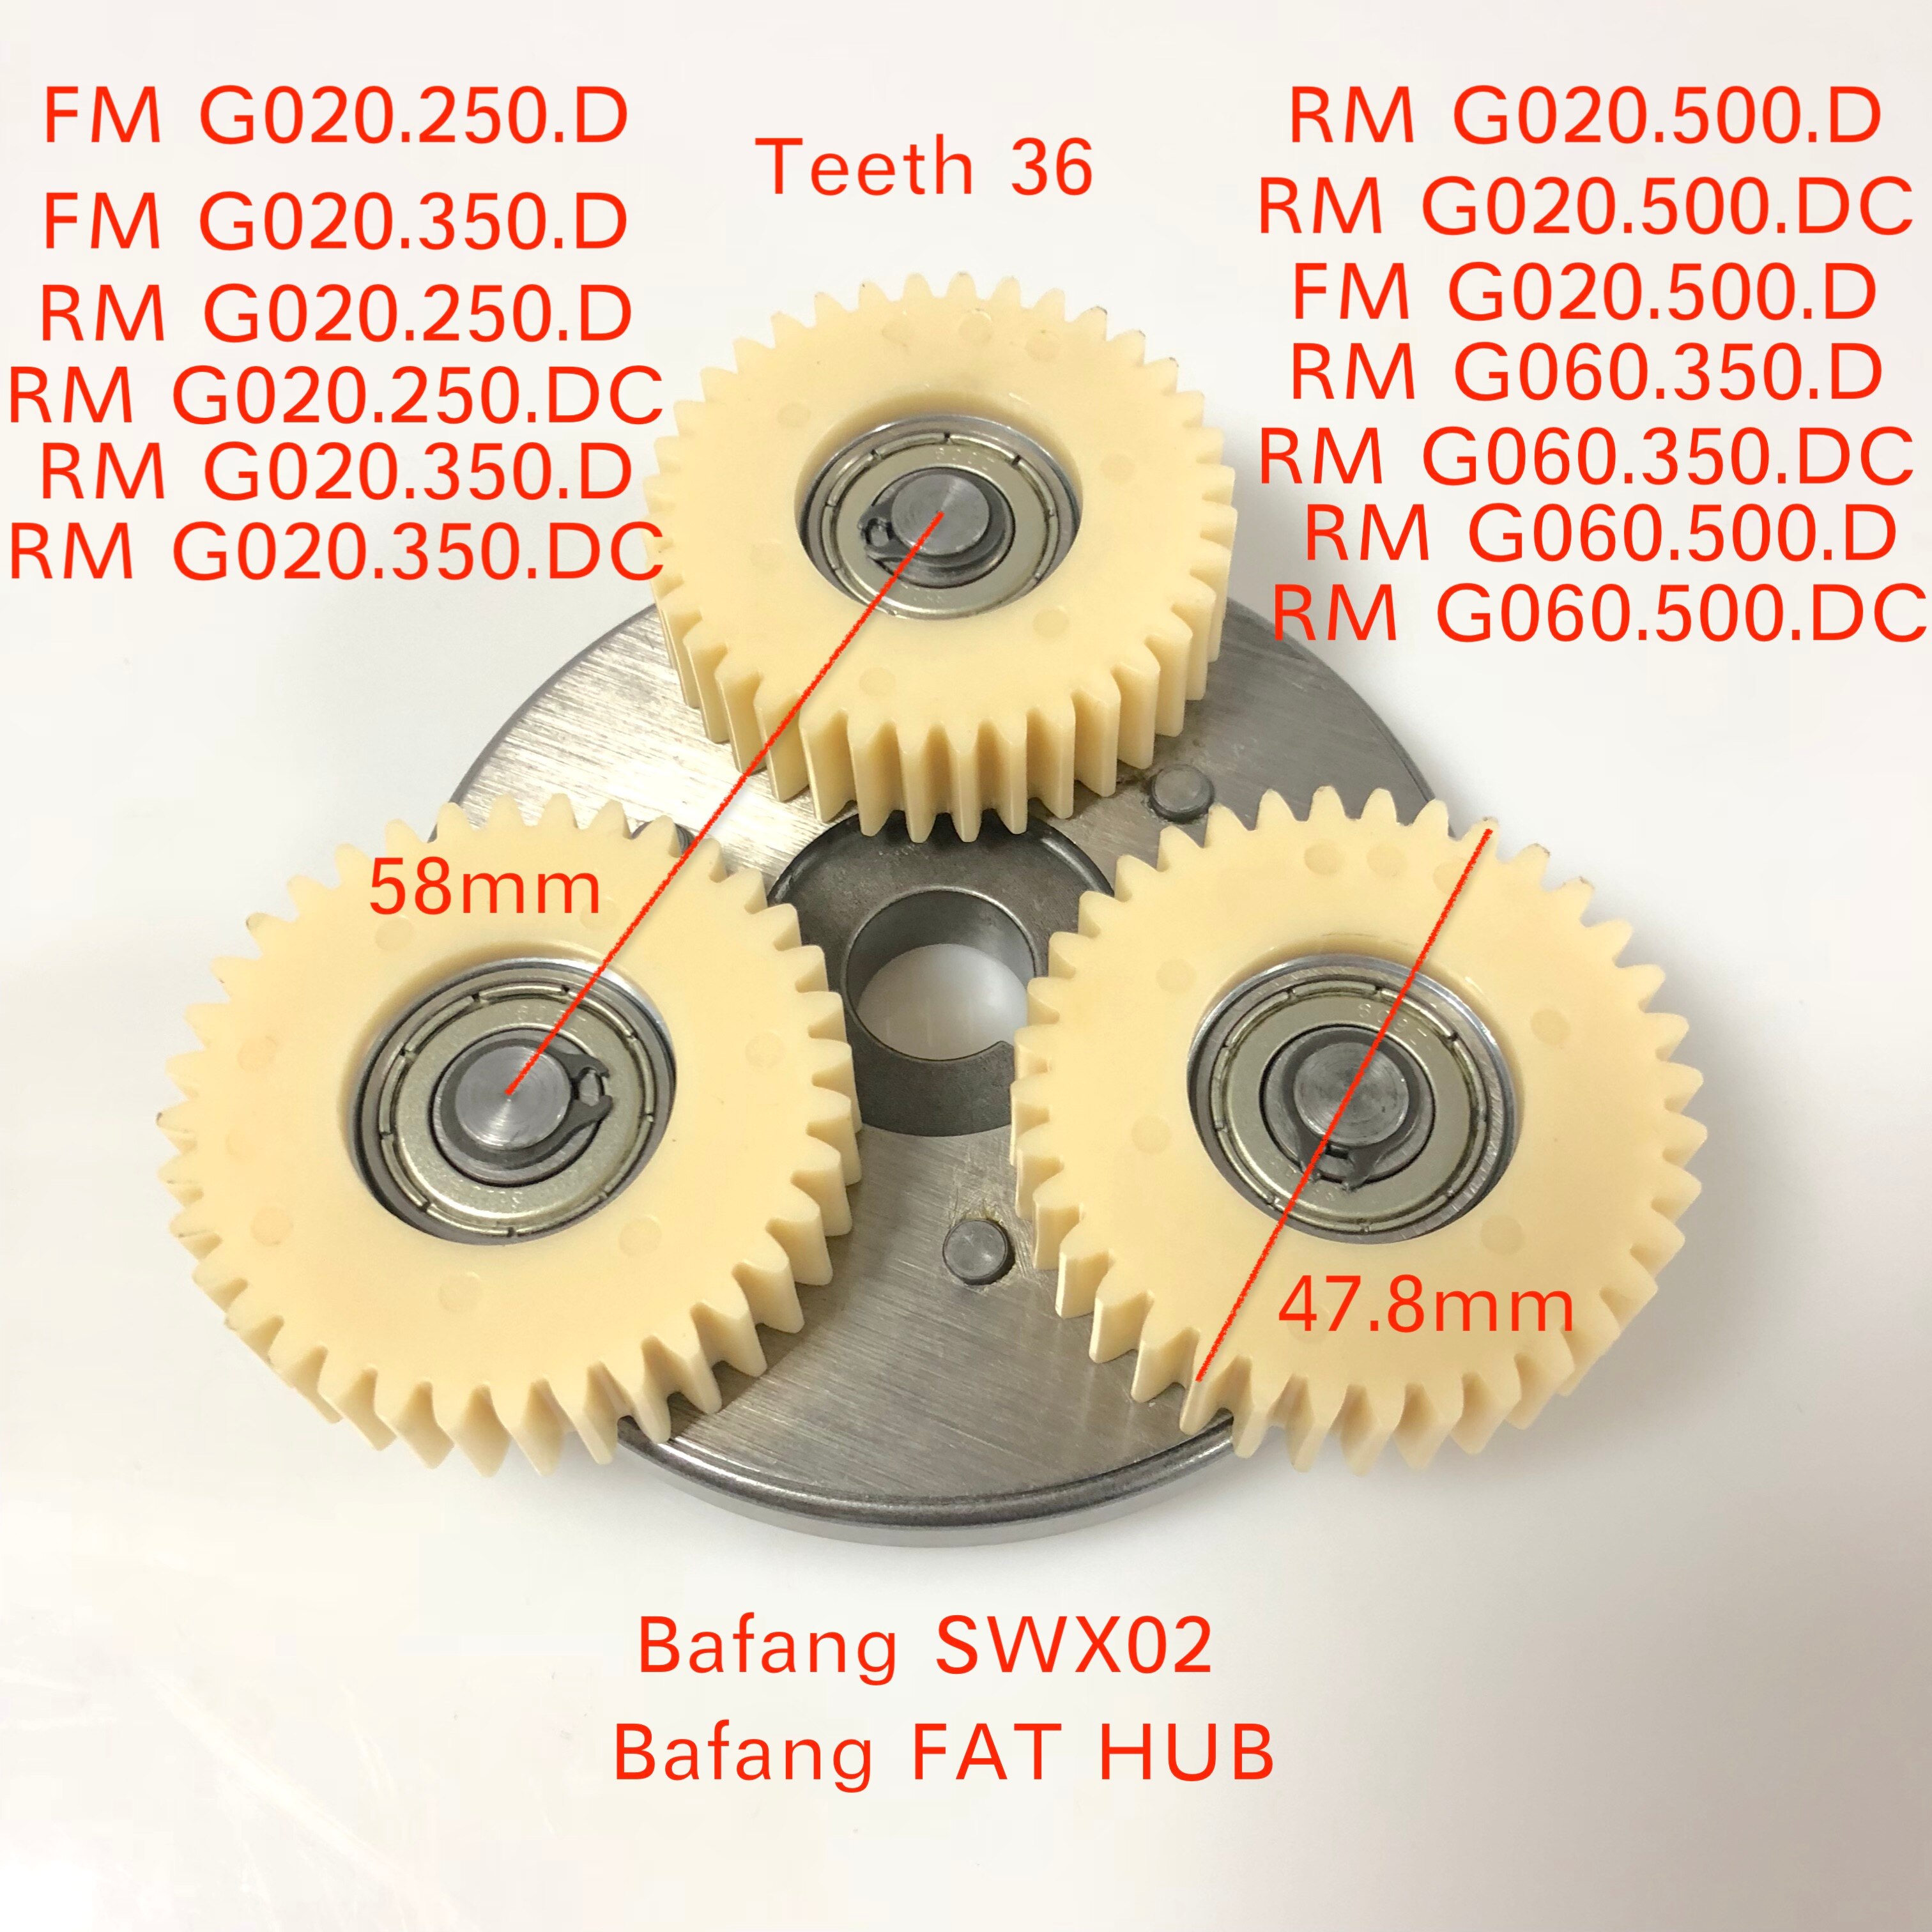 Bafang fat hub motor rm  g060.750 og rm  g020 swx 02 kobling nylon gear samling reservedel udskiftning